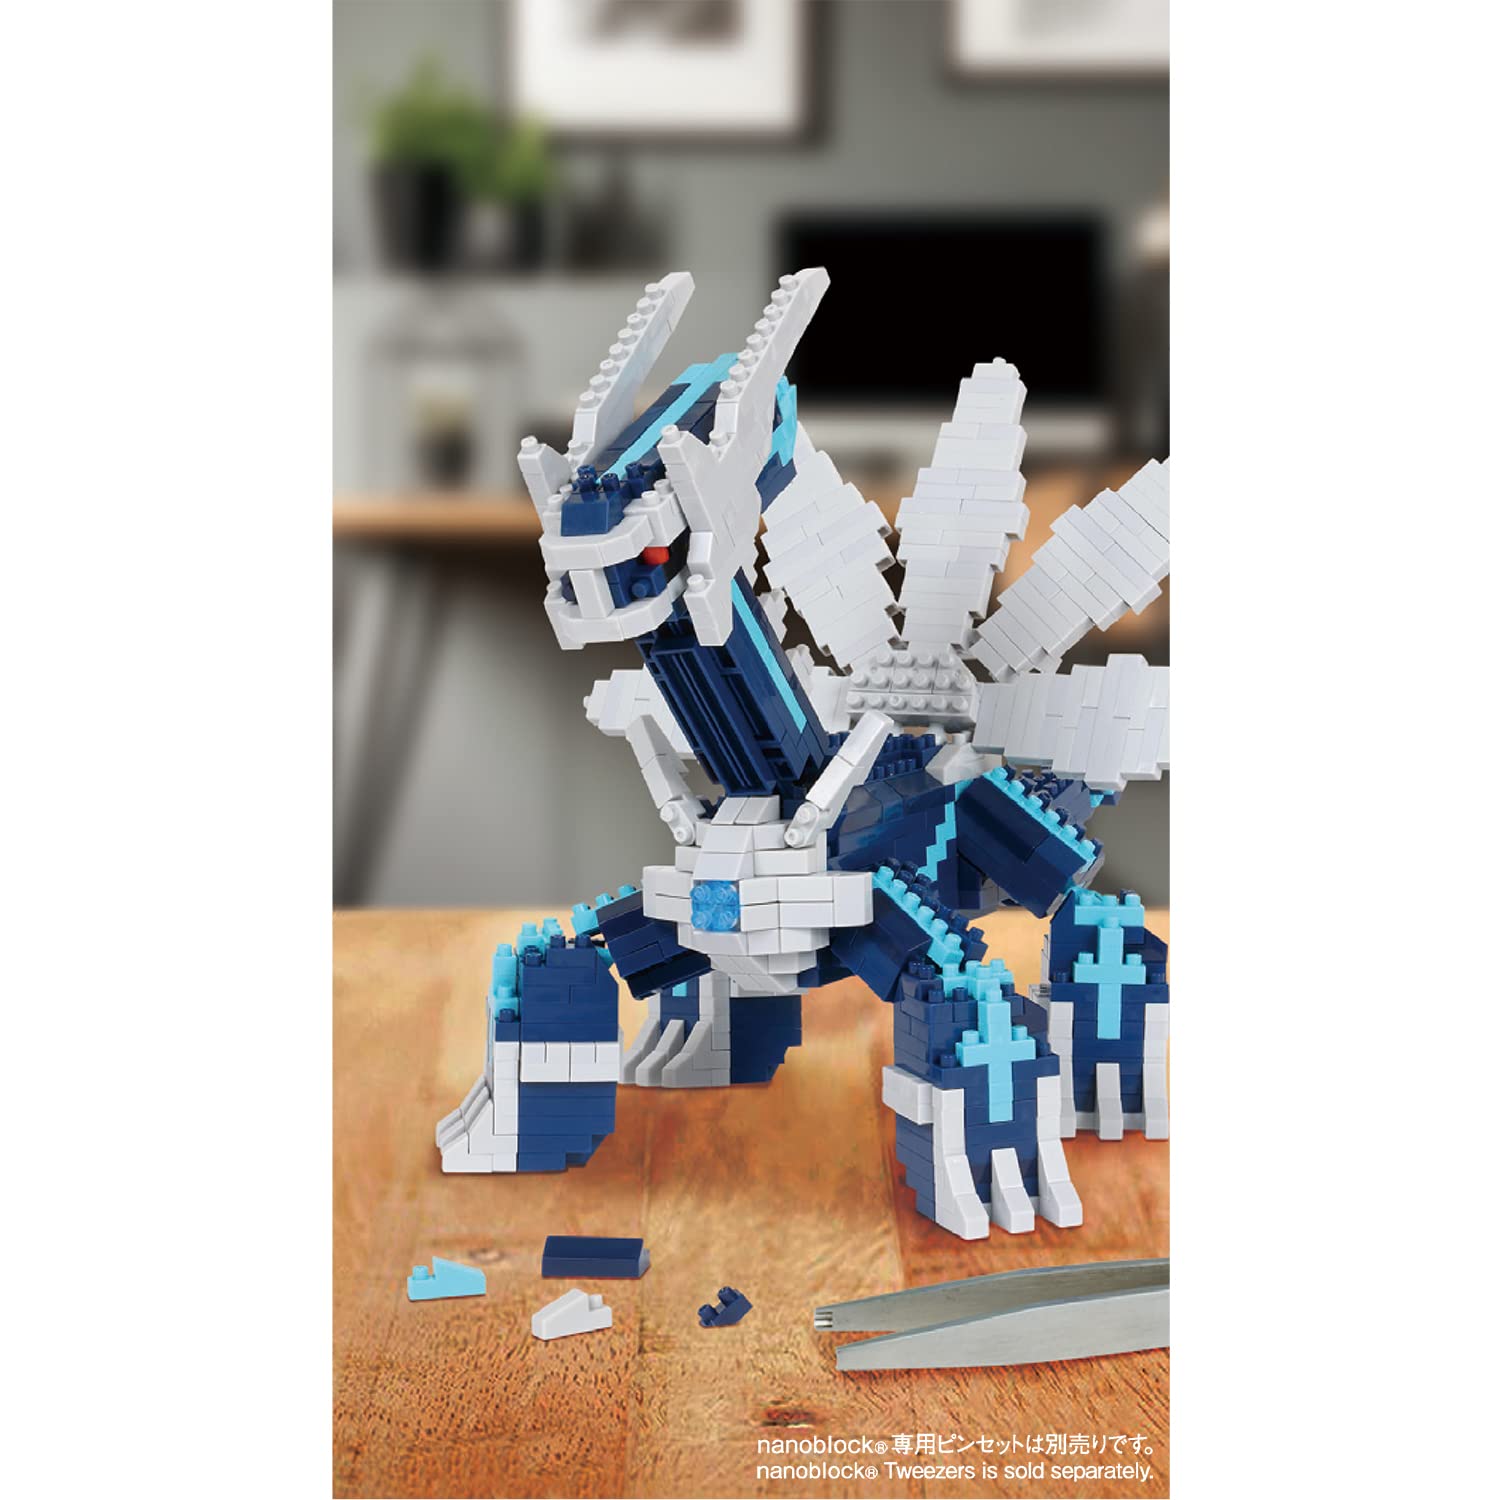 nanoblock - Pokémon - Dialga DX, Pokémon Series Building Kit